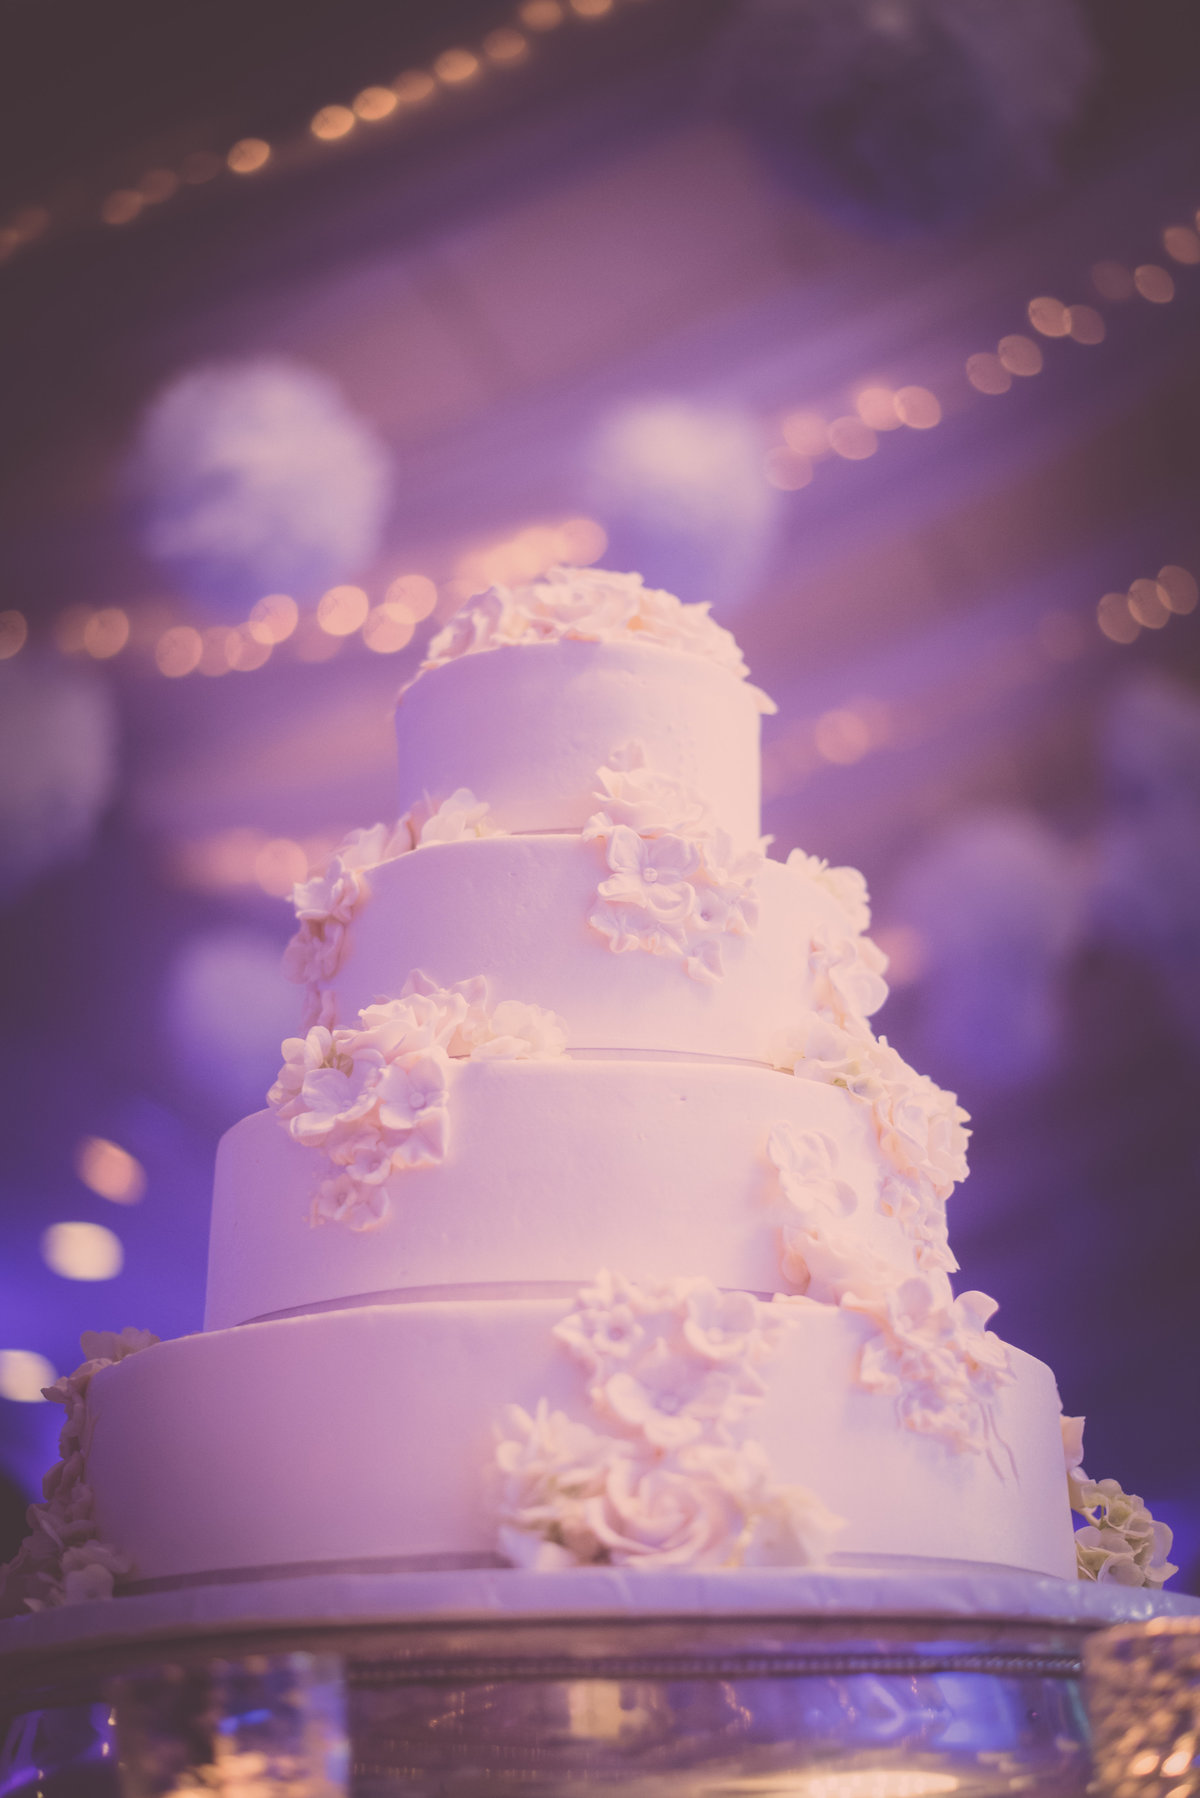 Wedding Cake - Flowerfield celebrations - Imagine Studios Photography - Wedding Photographer